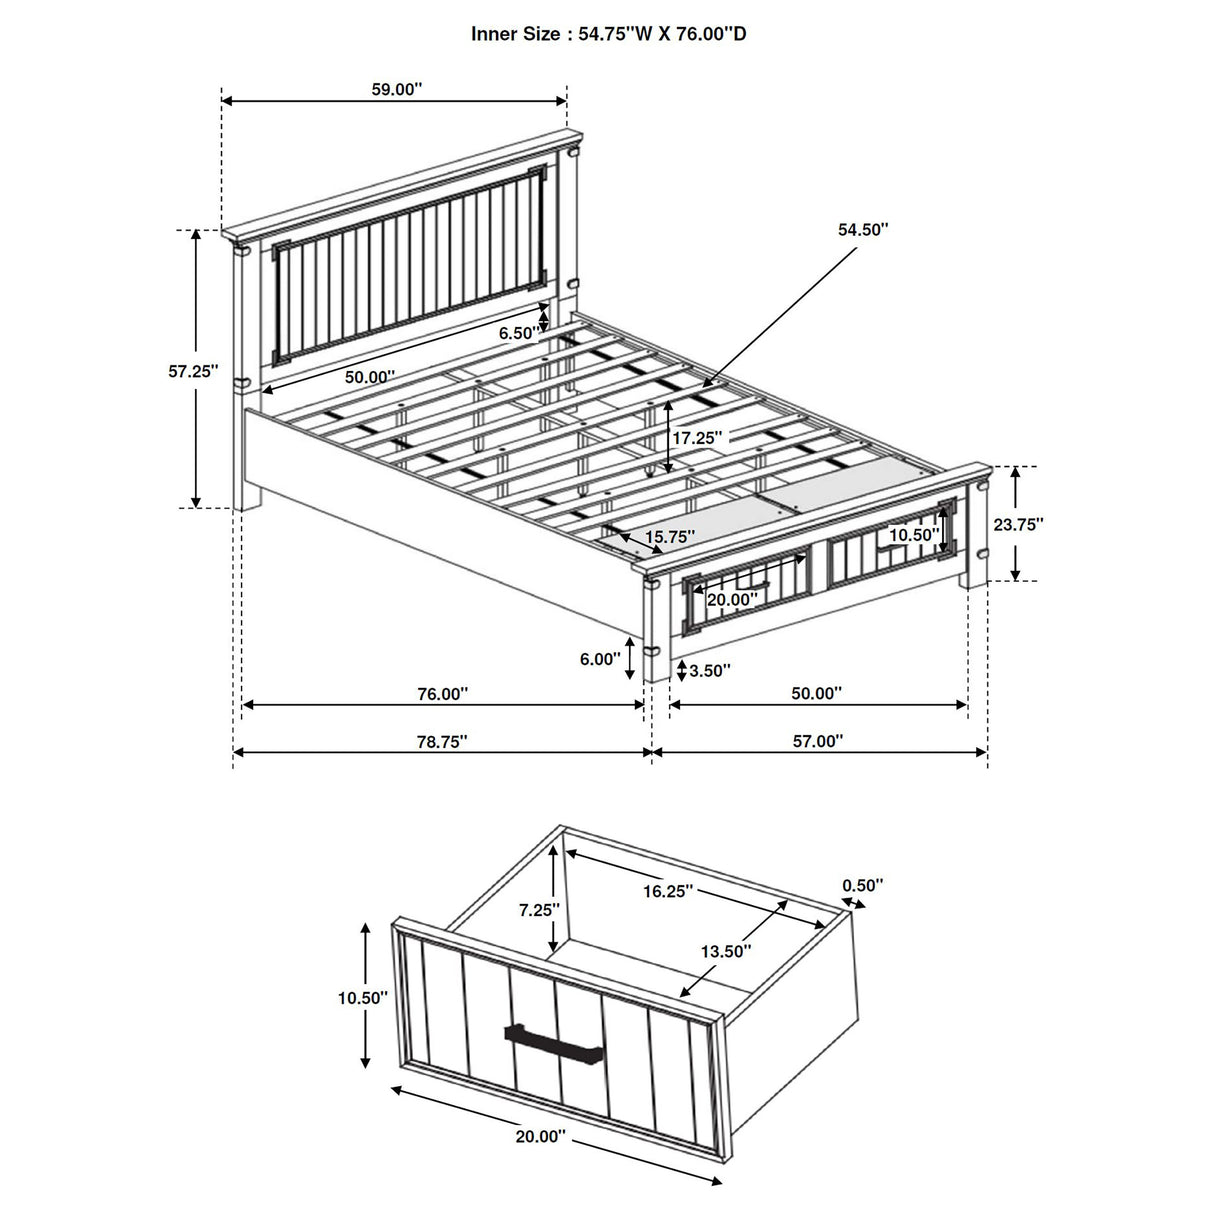 Full Storage Bed - Brenner Wood Full Storage Panel Bed Rustic Honey